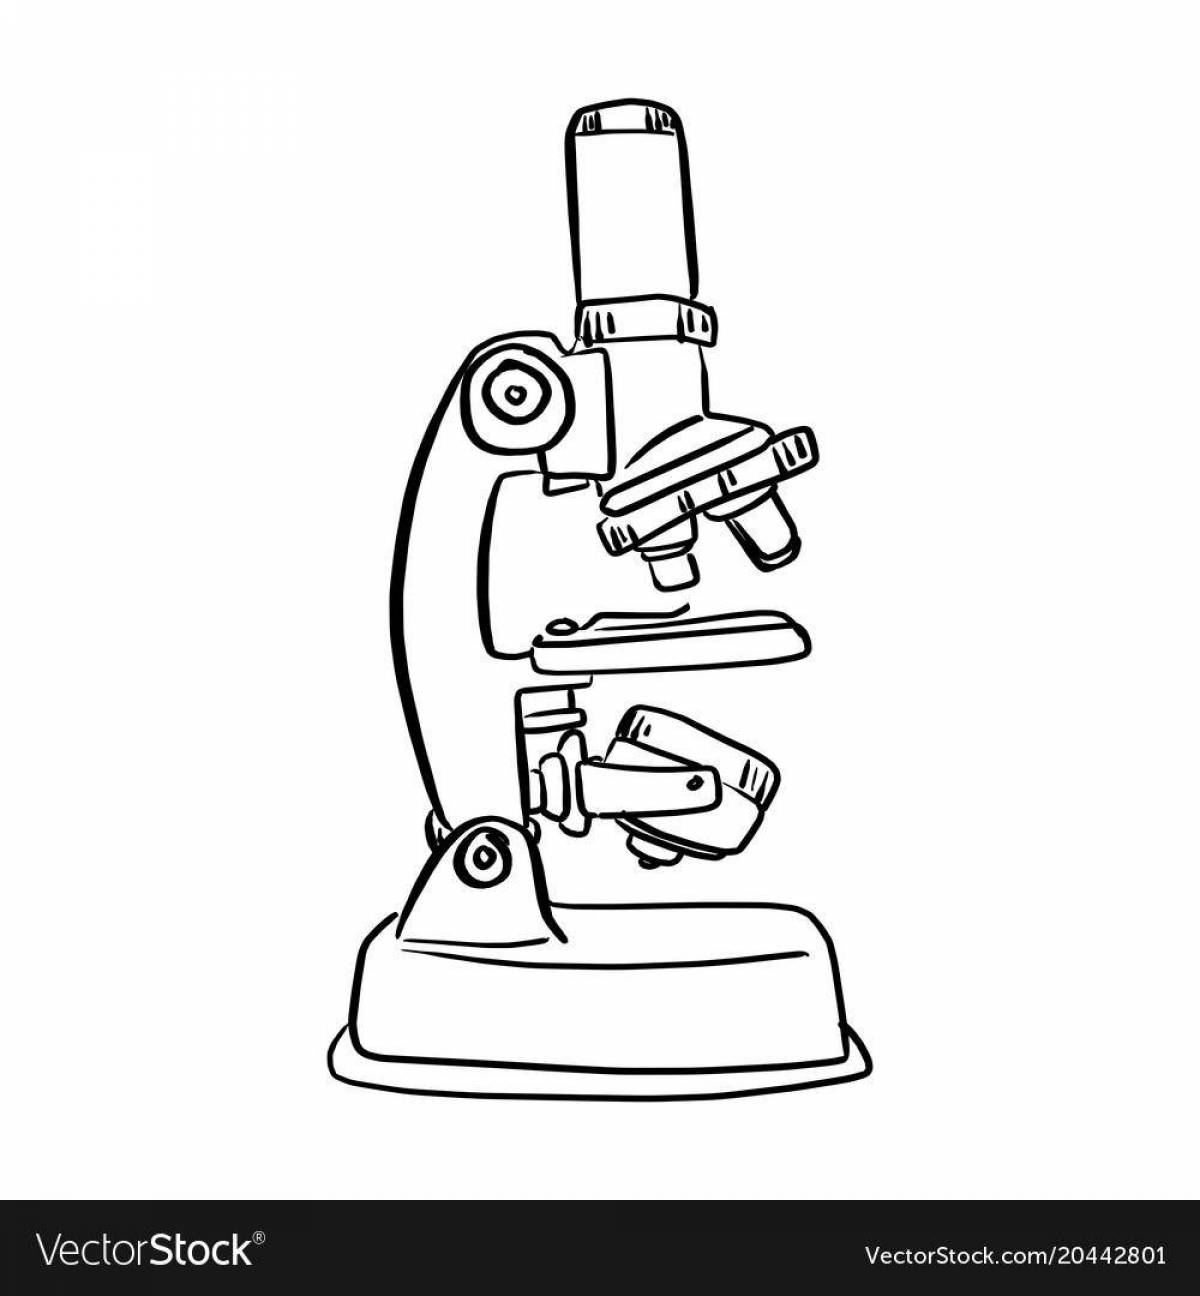 Child microscope #2